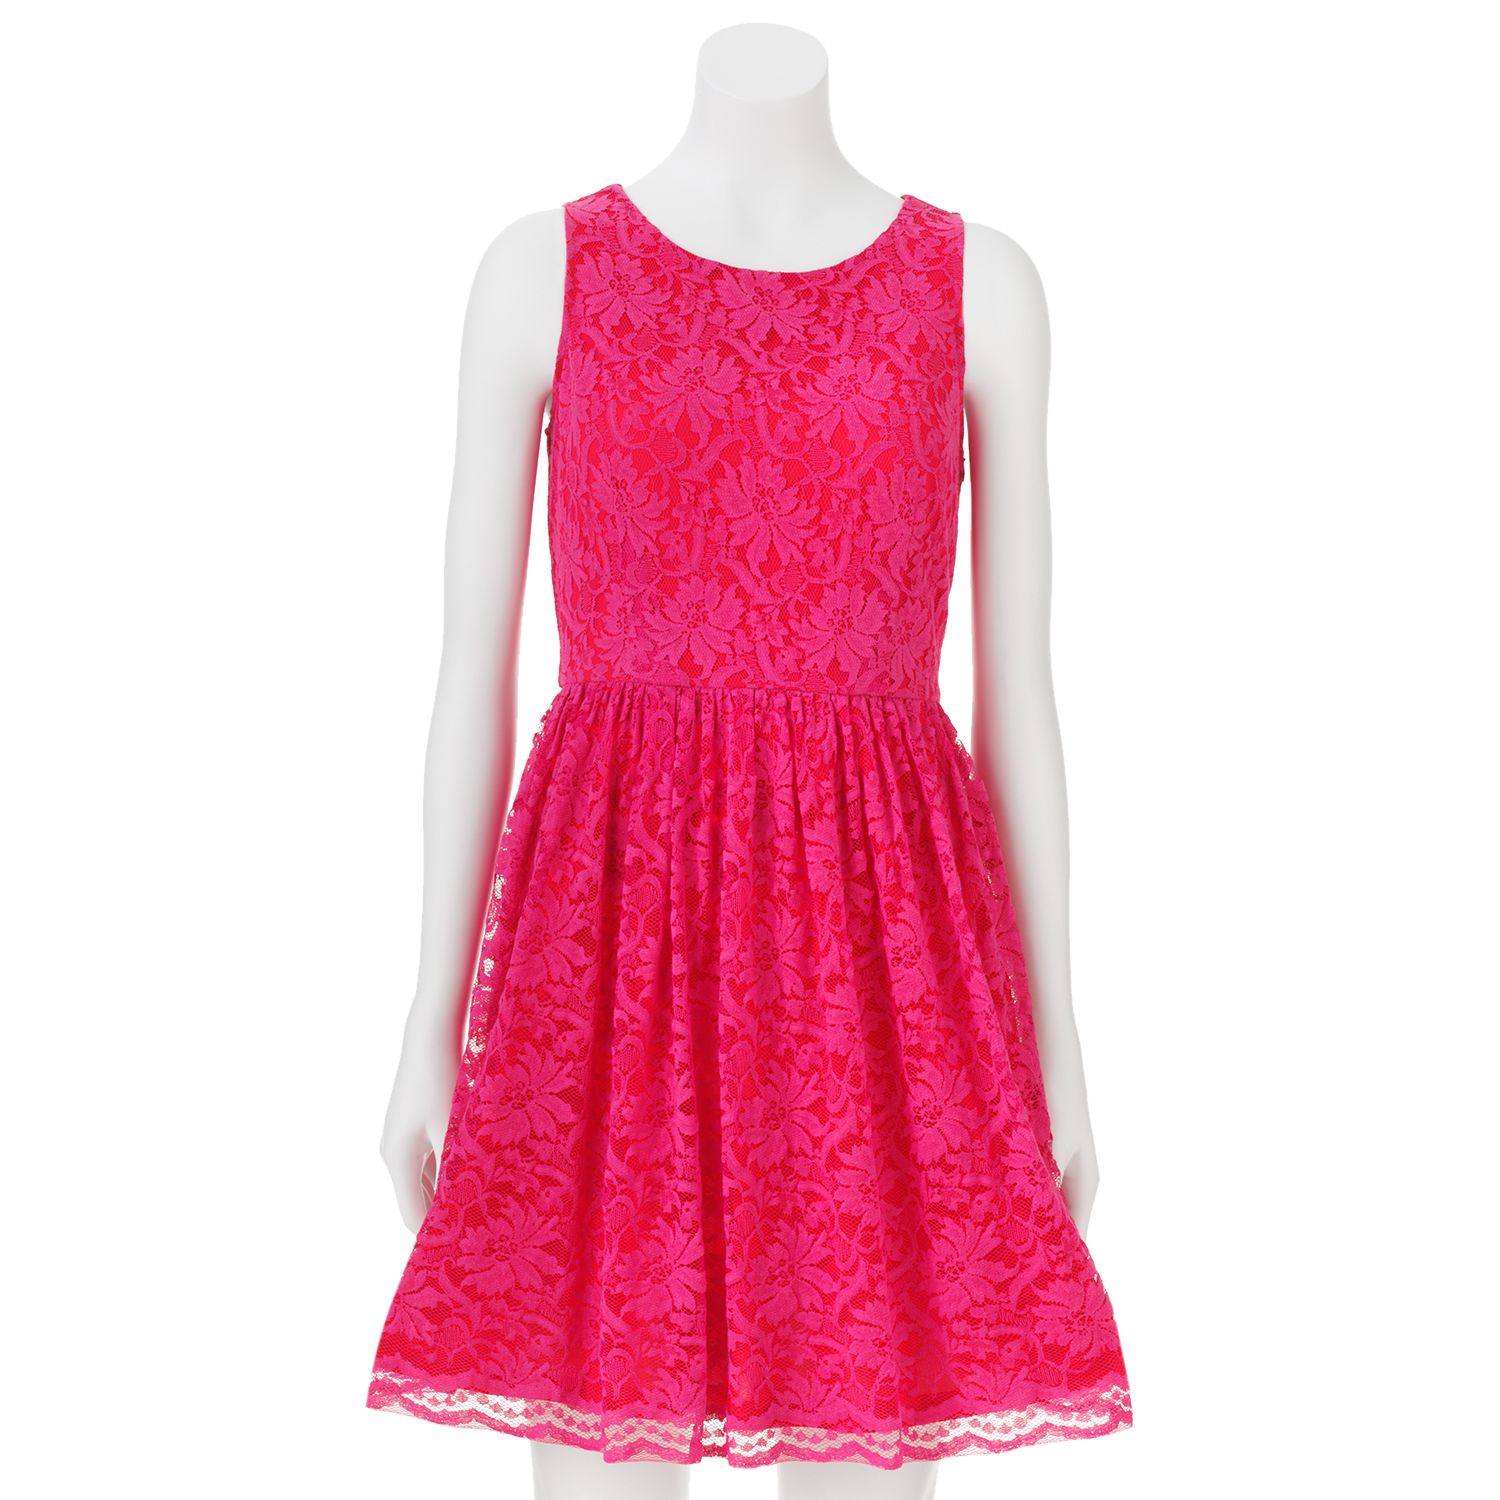 Juniors' Ultra Pink Lace Dress